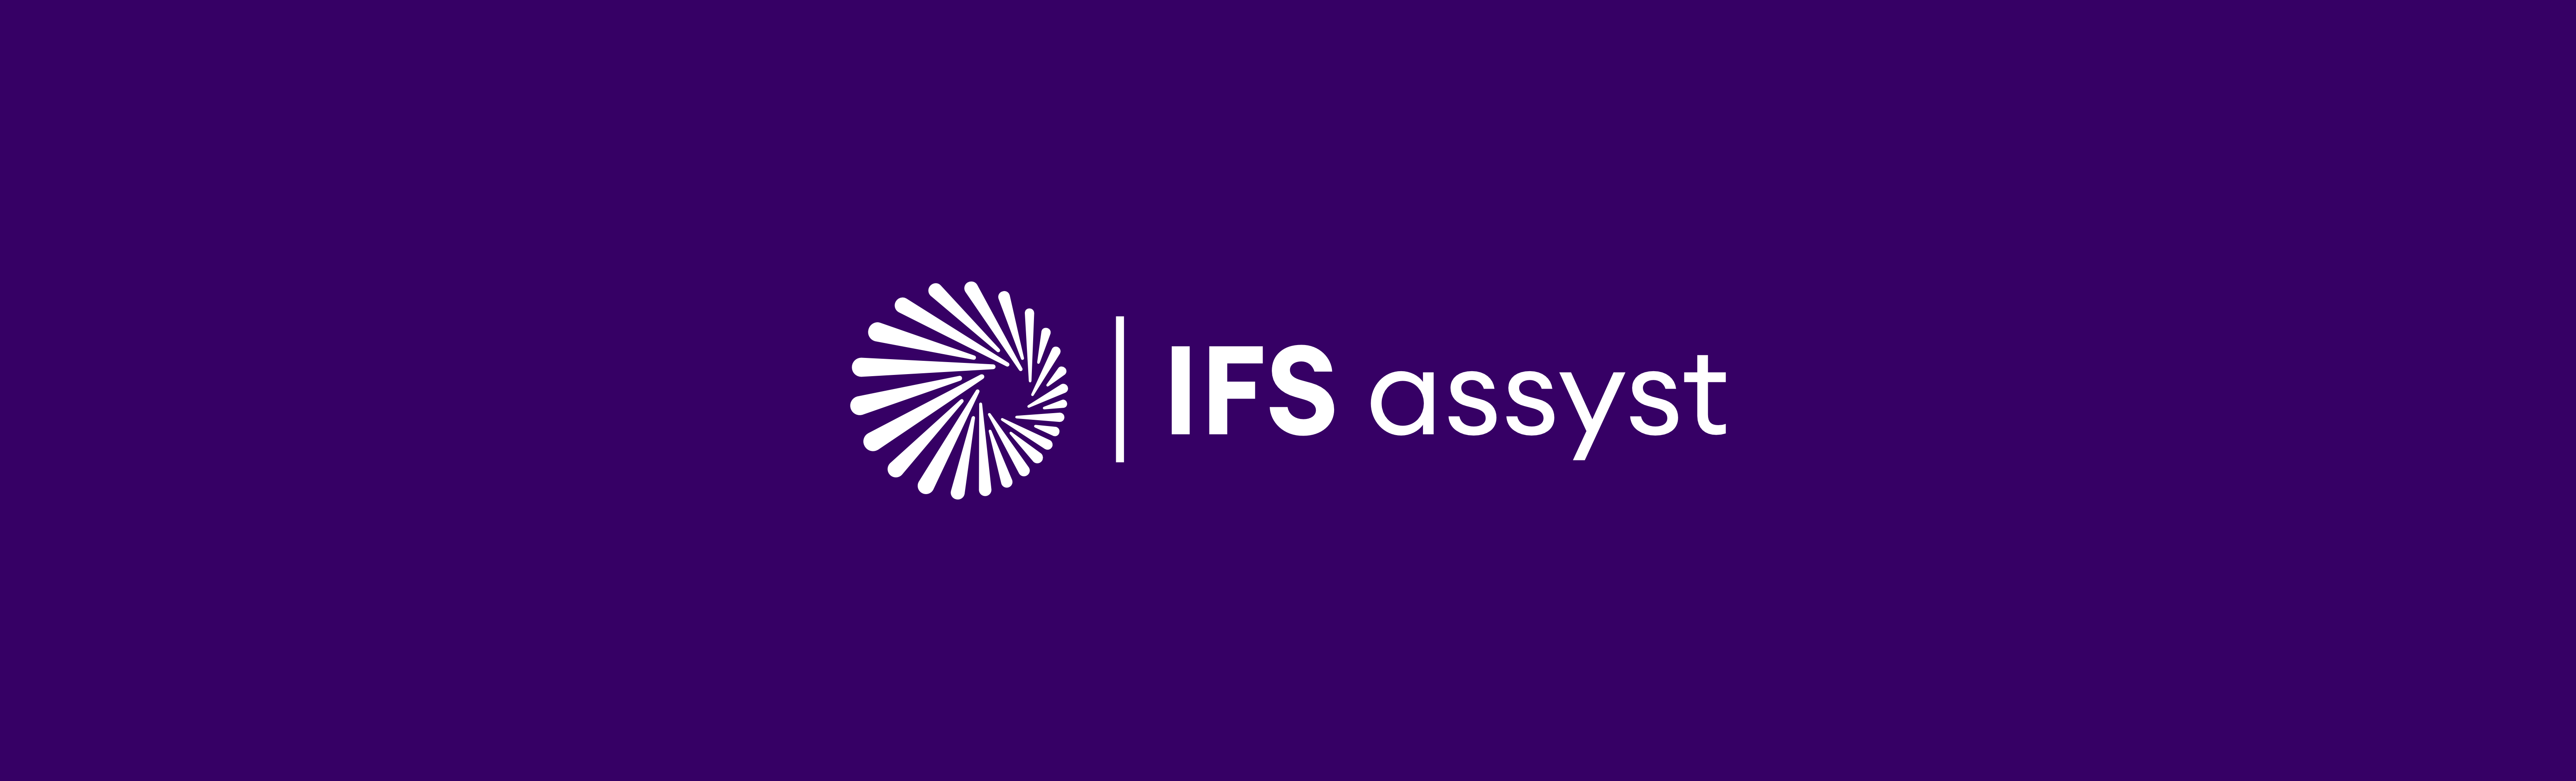 IFS assyst